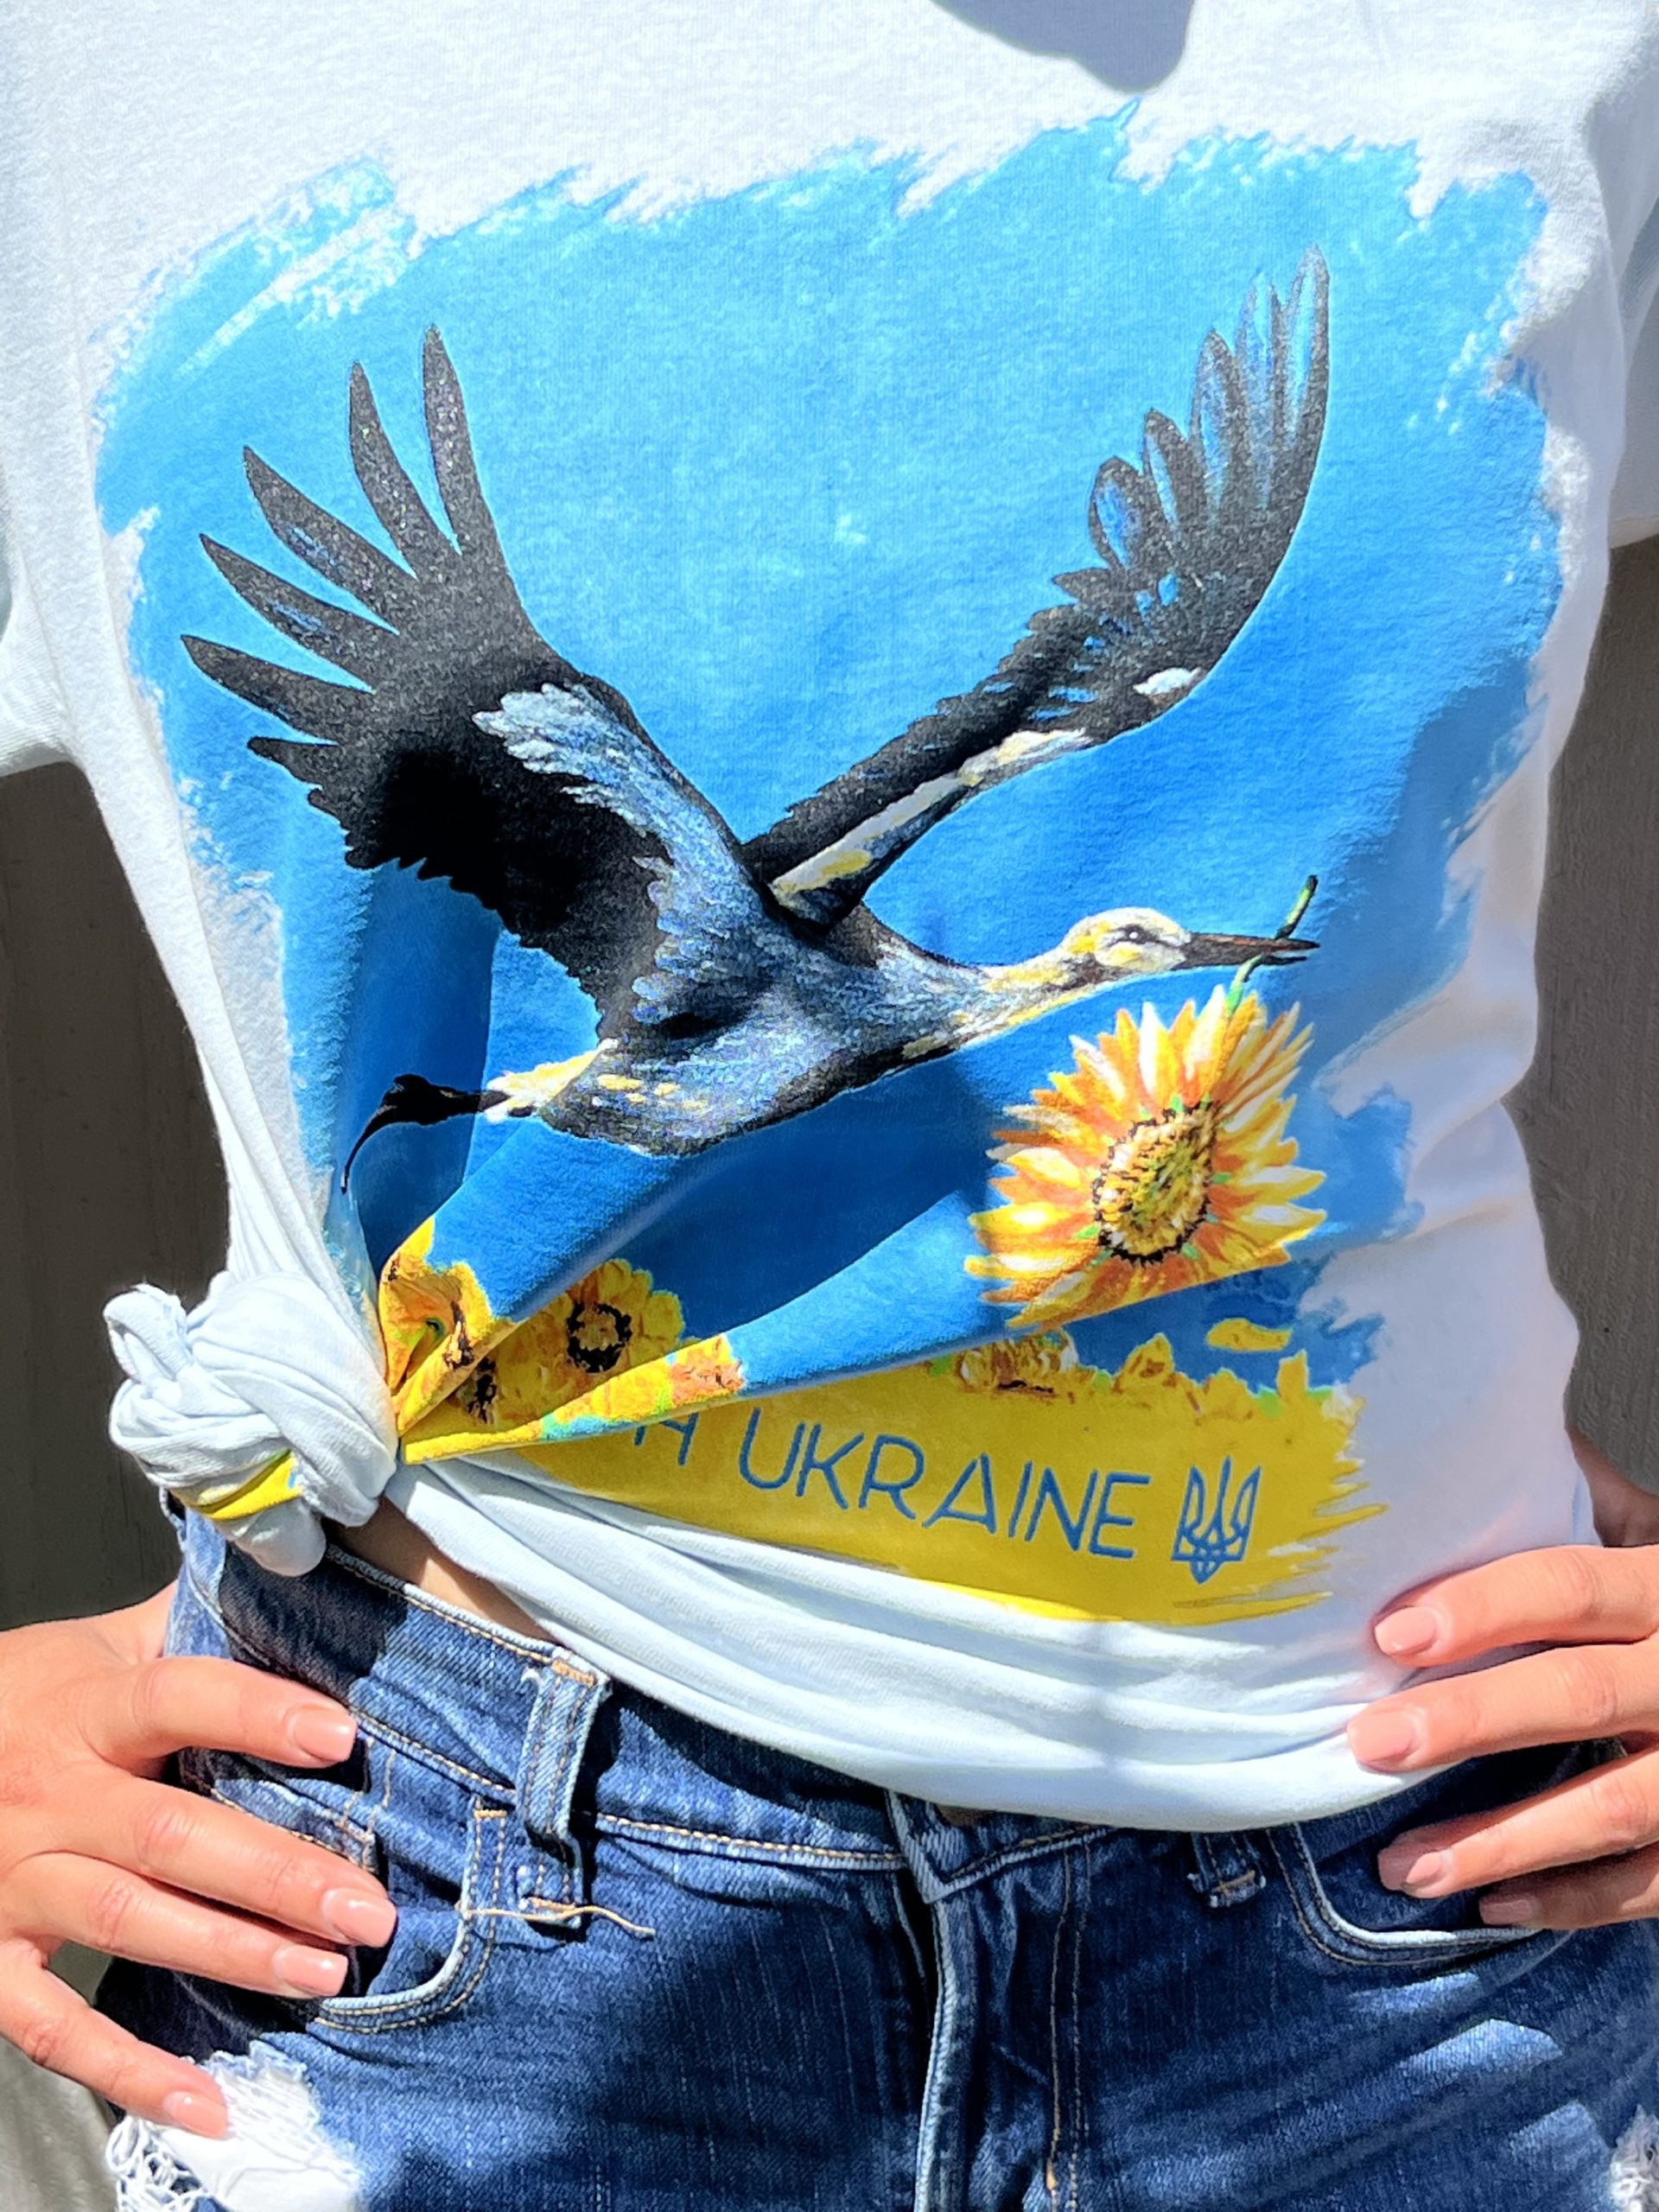 Stand with Ukraine t-shirt